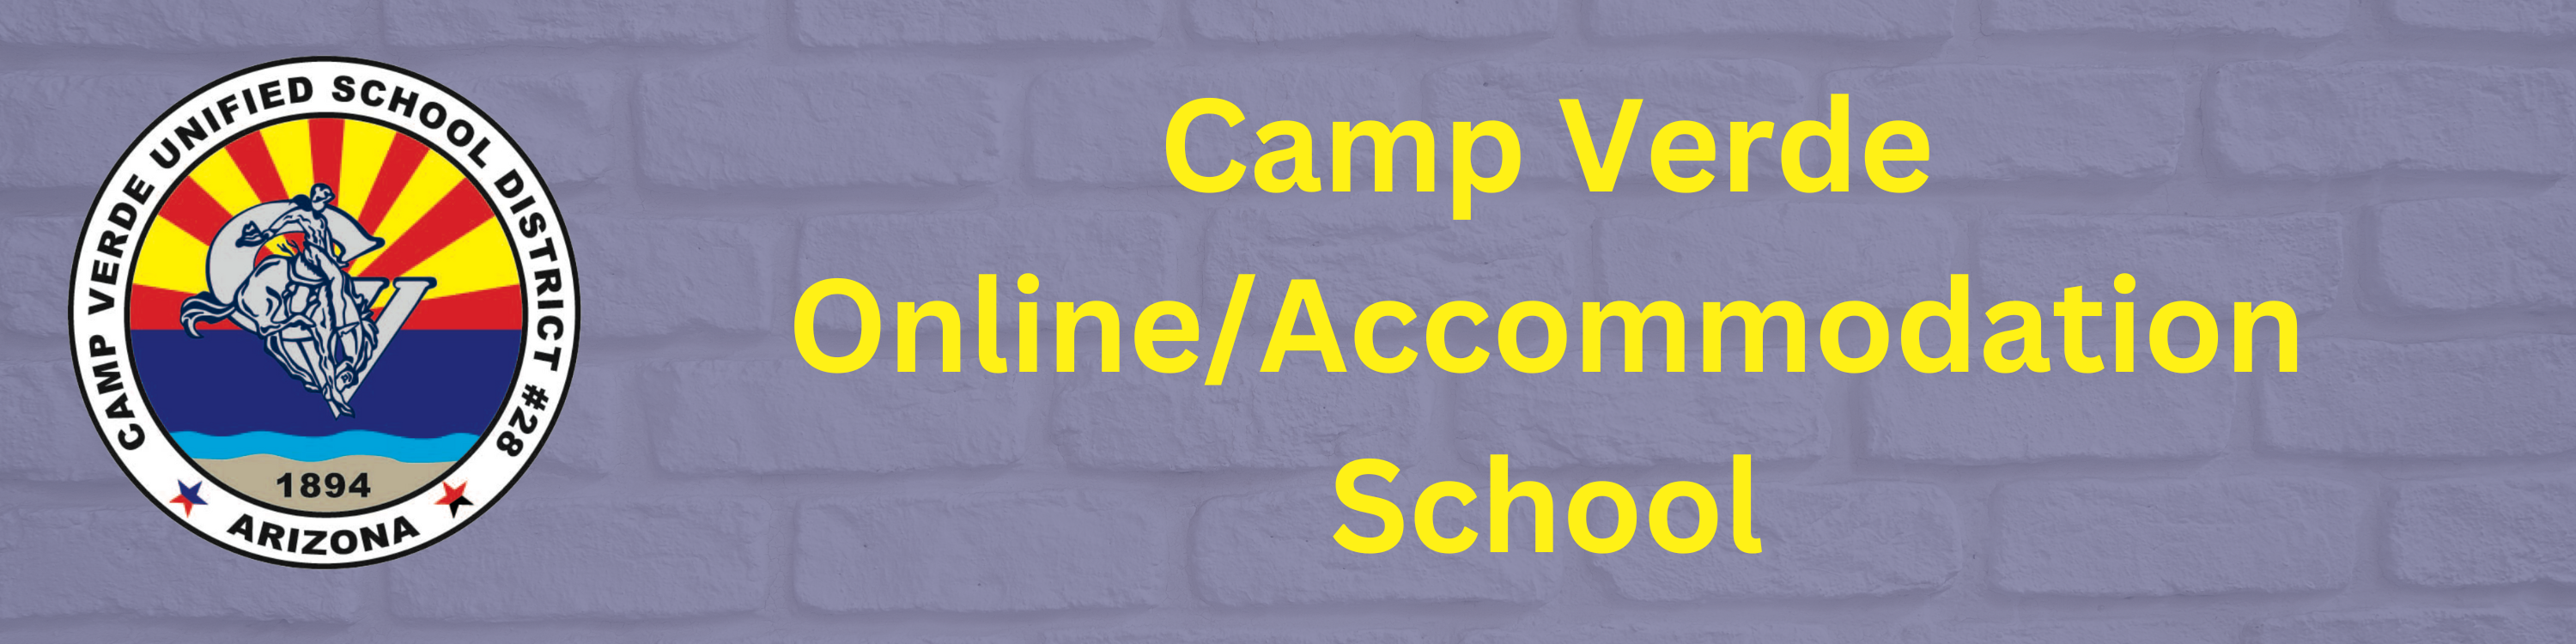 Camp Verde Online/Accommodation School